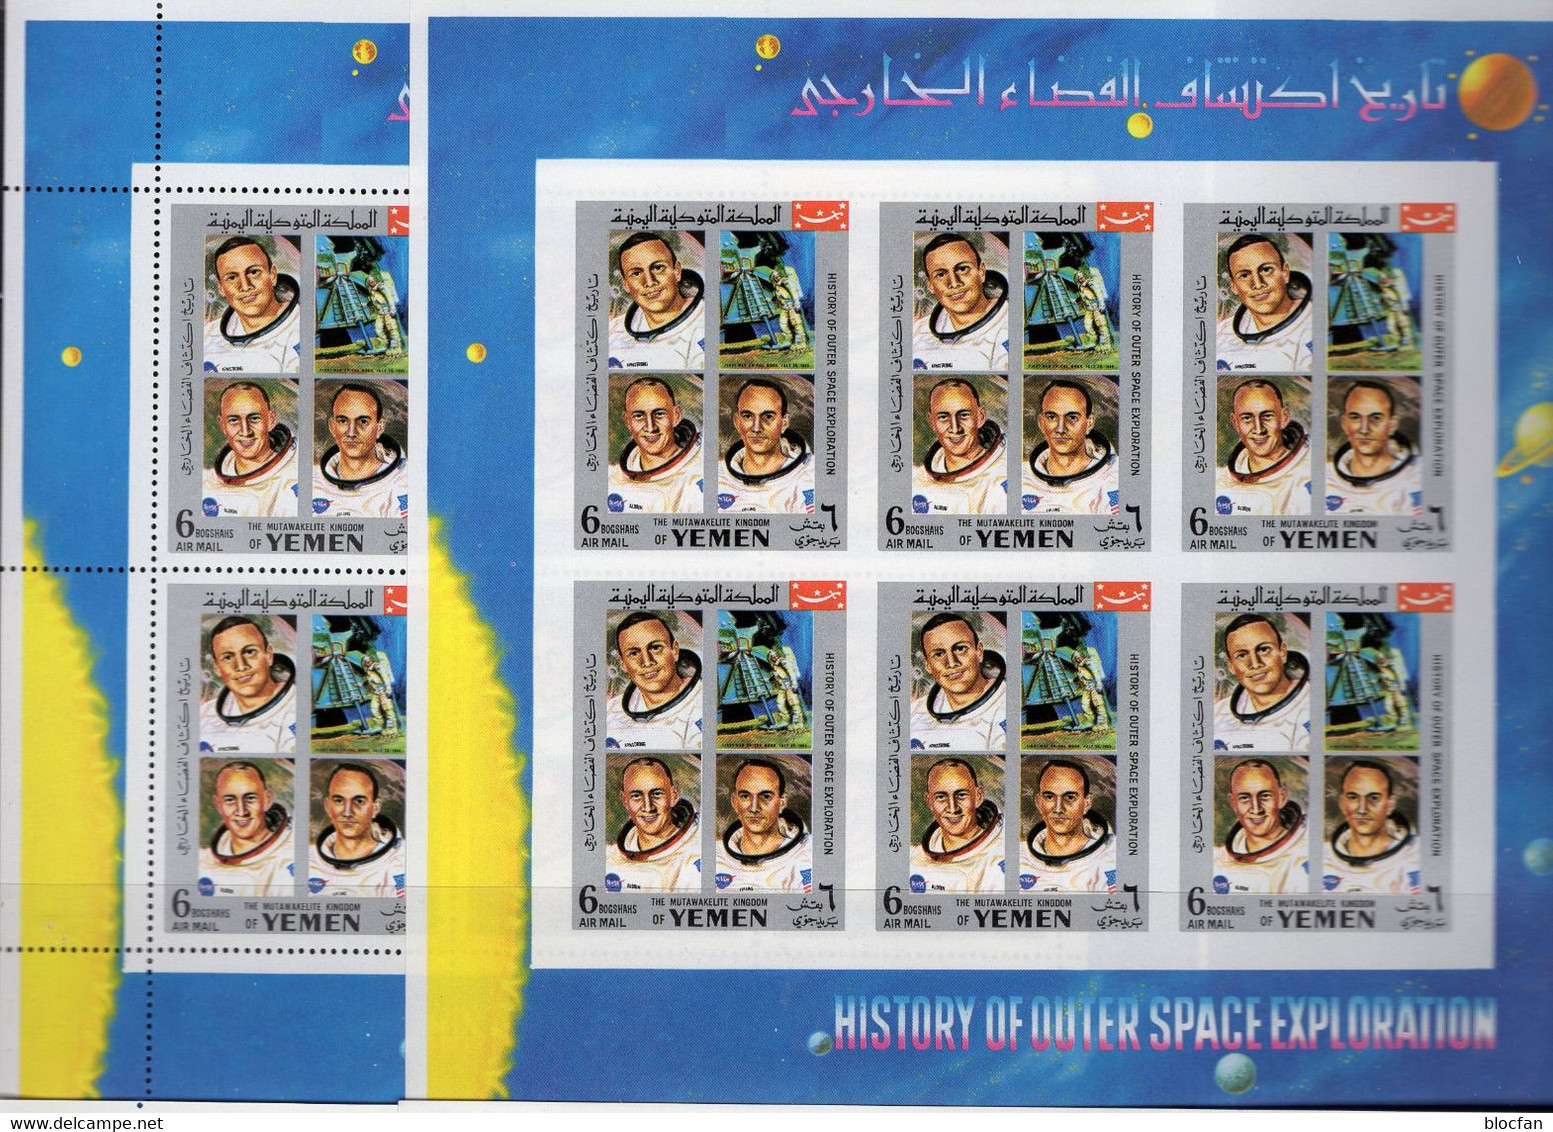 USA-Astronauten 1969 Jemen 883 Kleinbogen A/B ** 12€ Apollo 11 Sheets Ss Sheetlets M/s Bf History Space Exploration - Perforiert/Gezähnt